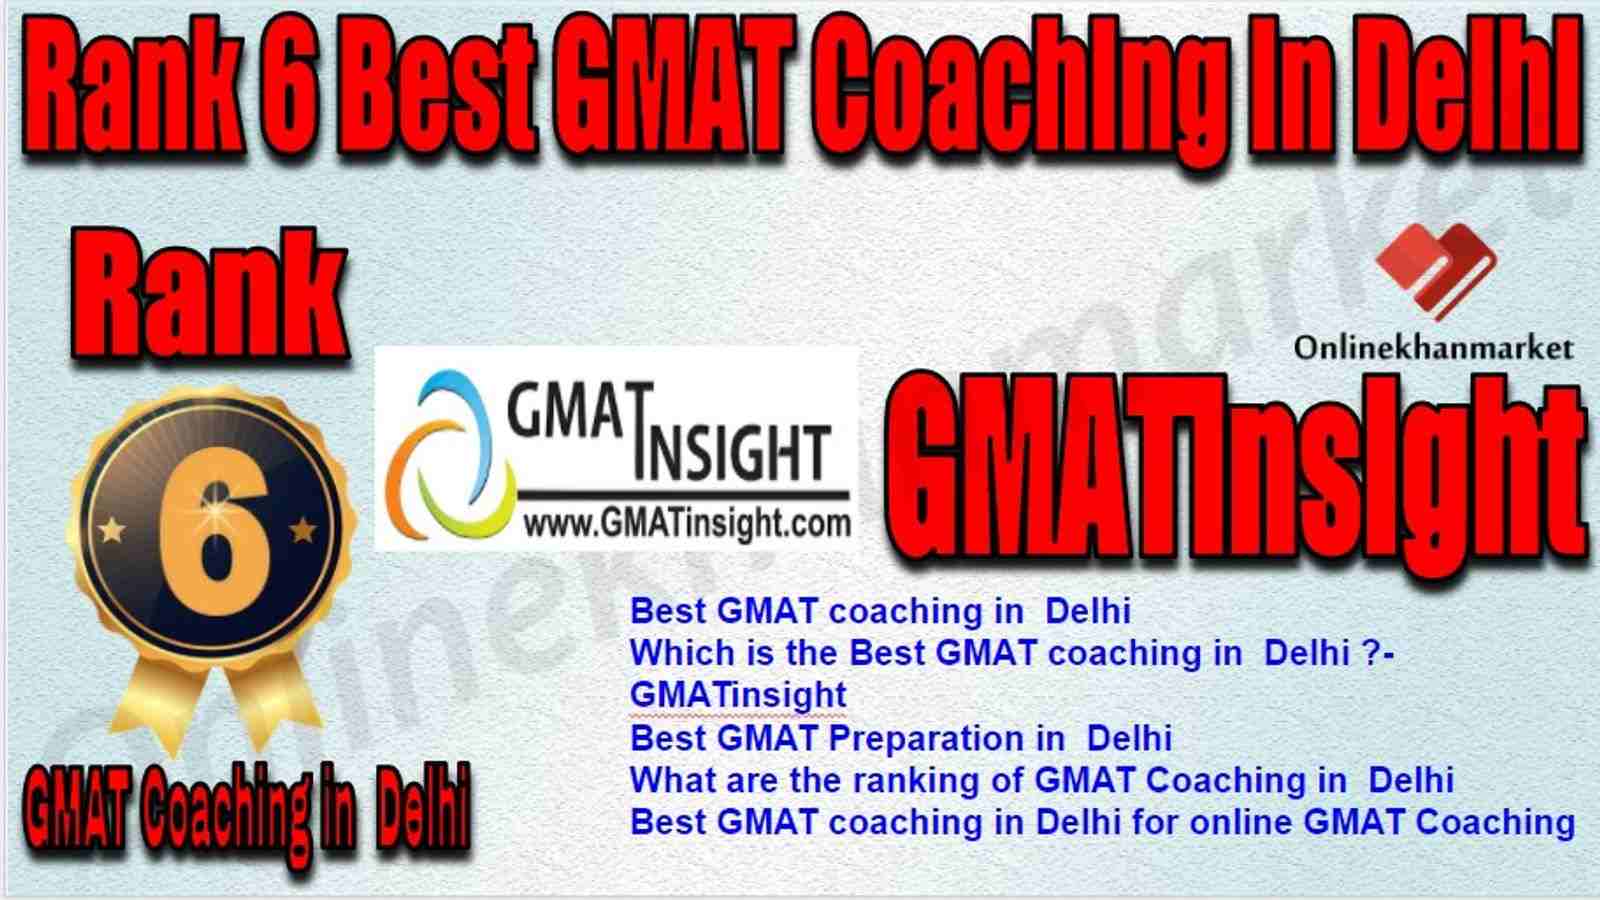 Rank 6 Best GMAT Coaching in Delhi